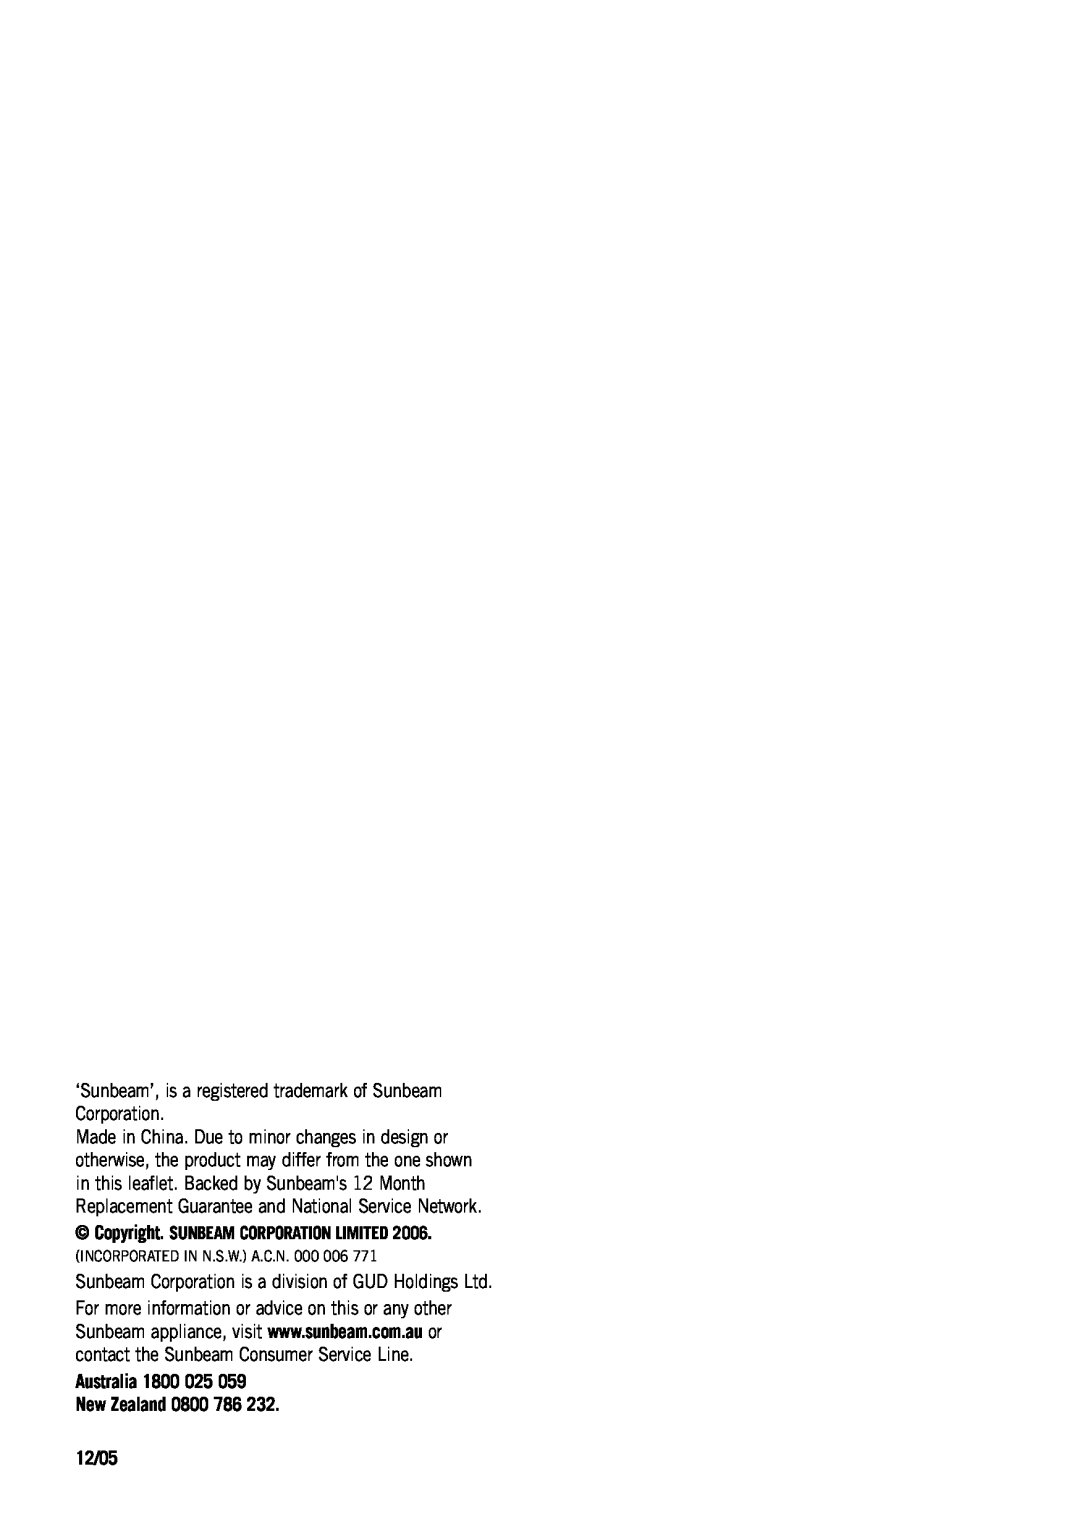 Sunbeam HP3510 manual 12/05, Copyright. SUNBEAM CORPORATION LIMITED 